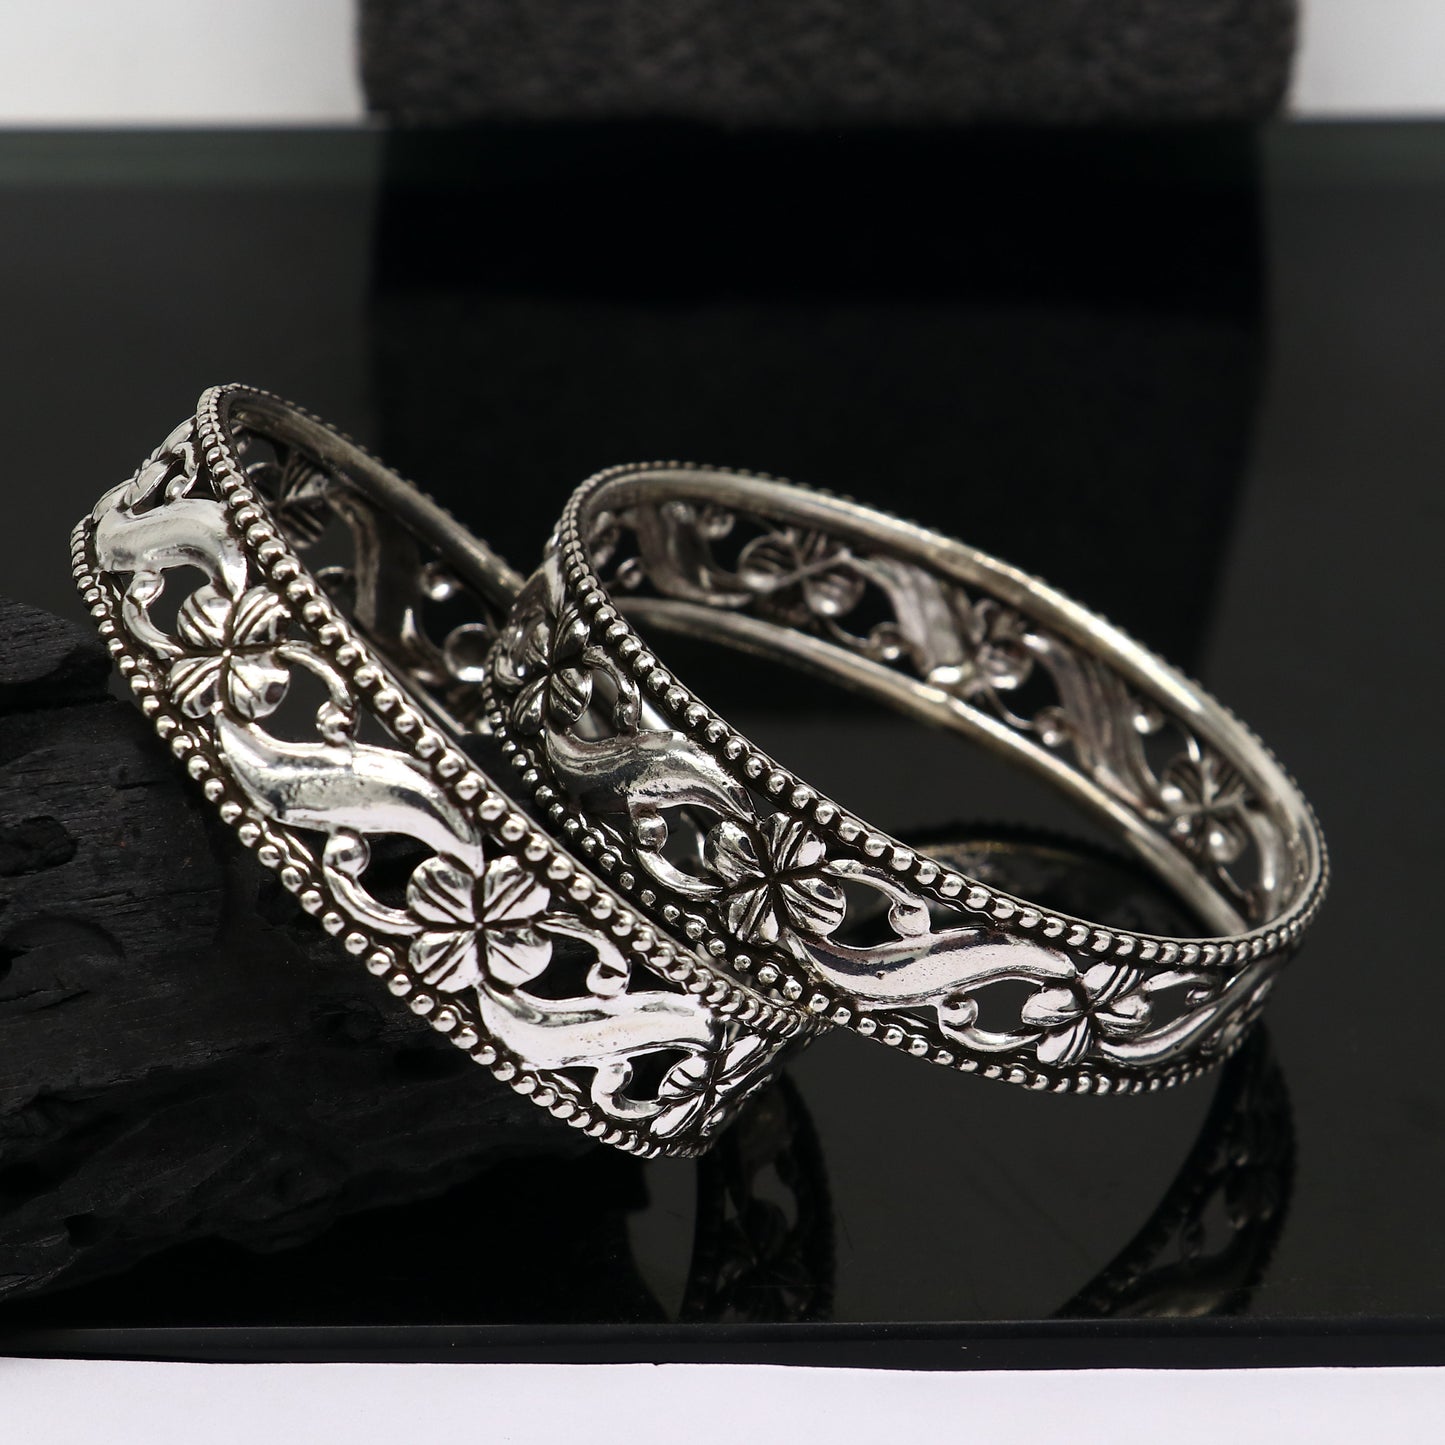 Floral style 925 sterling silver amazing customized bangle bracelet kada , best brides gifting ethnic stylish tribal fashion jewelry nba394 - TRIBAL ORNAMENTS